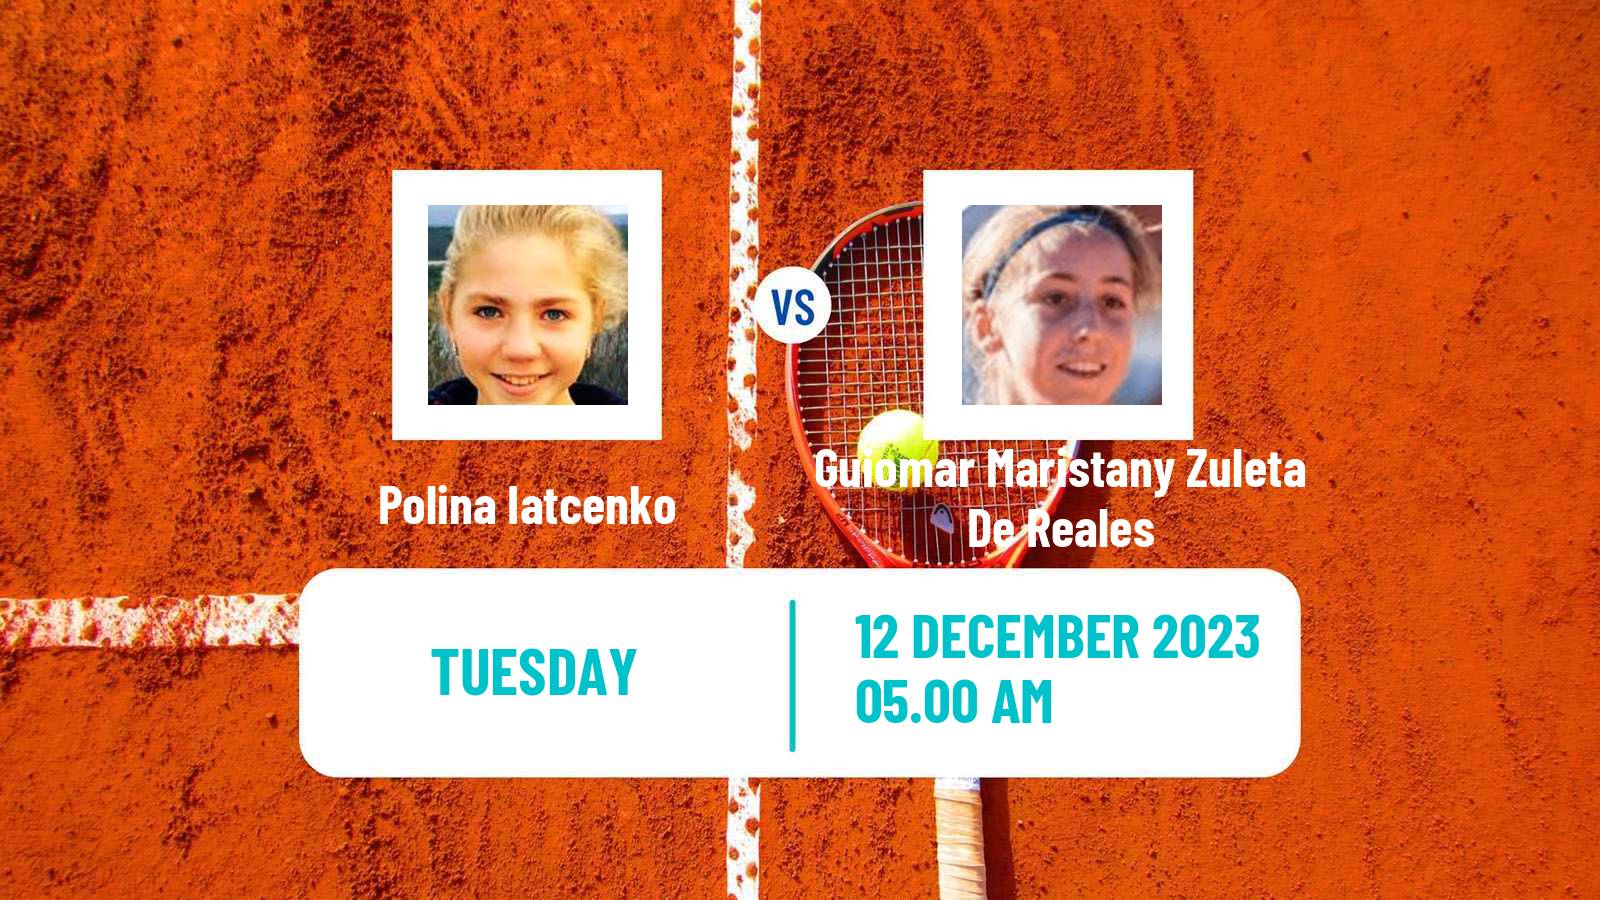 Tennis ITF W25 Monastir 6 Women 2023 Polina Iatcenko - Guiomar Maristany Zuleta De Reales